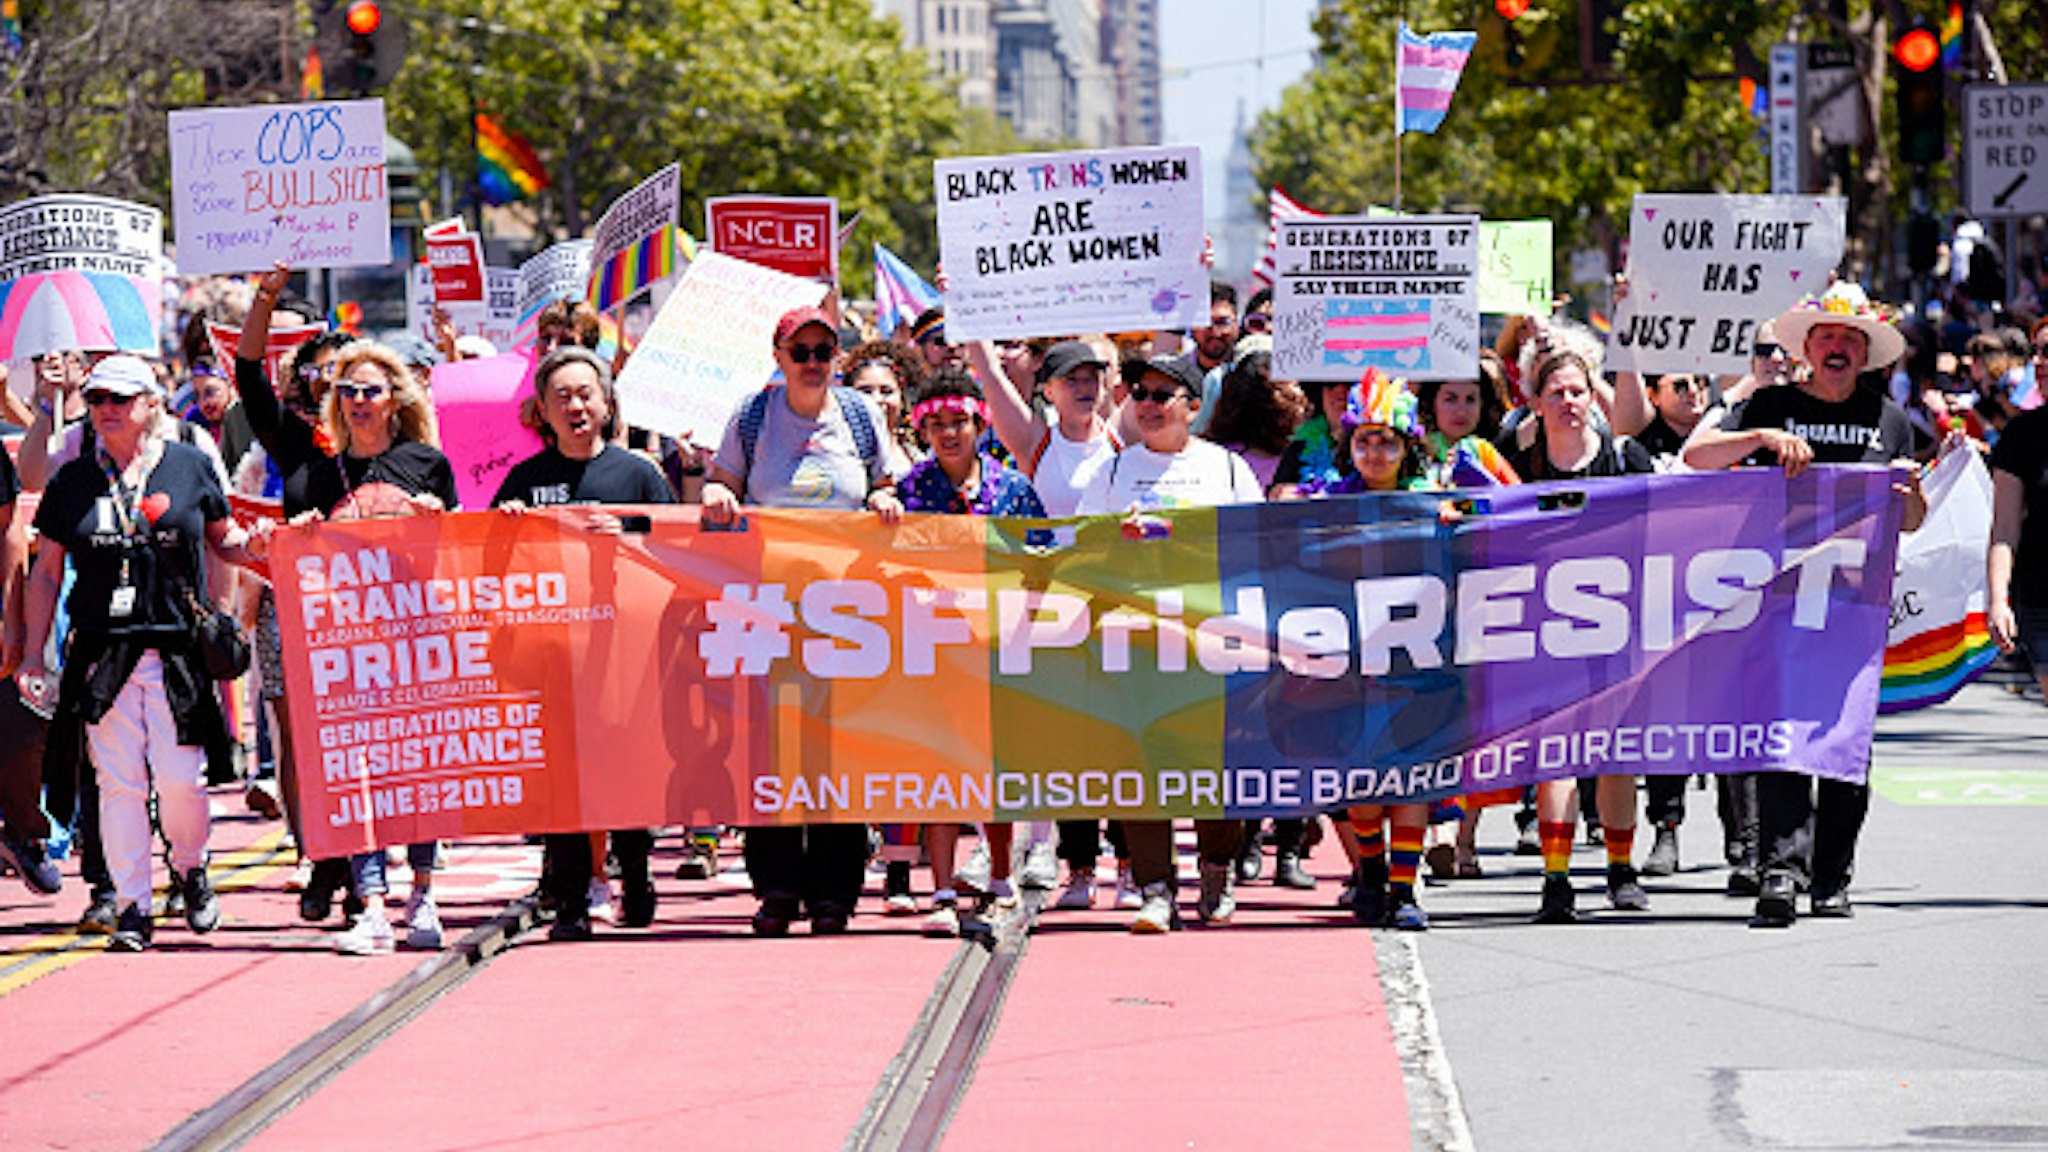 SAN FRANCISCO, CALIFORNIA - JUNE 30: Parade participants walk for a cause during the San Francisco Gay Pride parade on June 30, 2019 in San Francisco, California